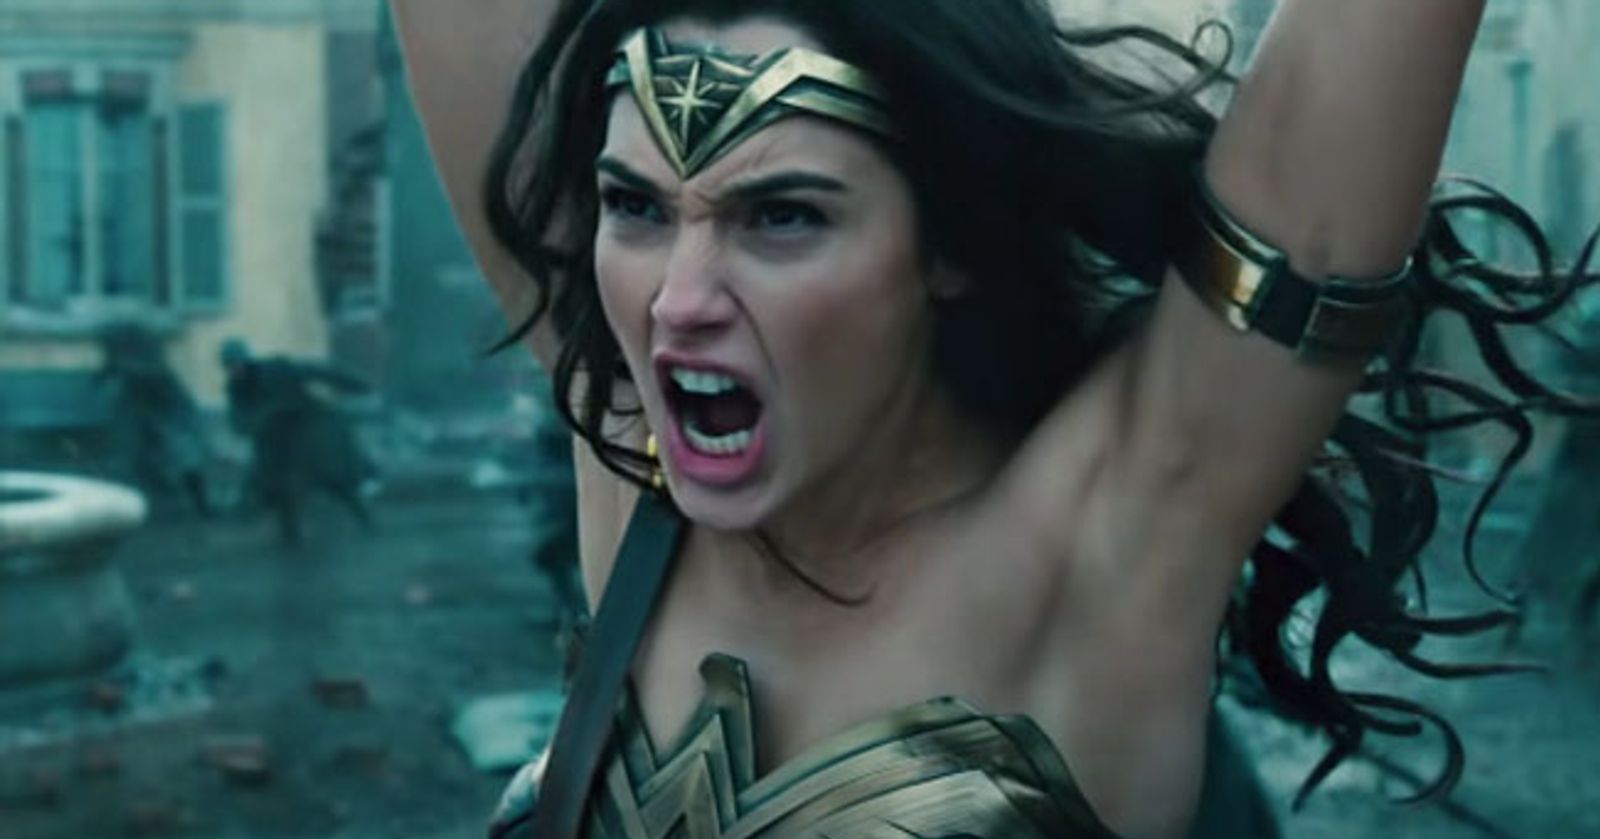 Gal Gadot Teases Her Wonder Woman Return In the New DCU